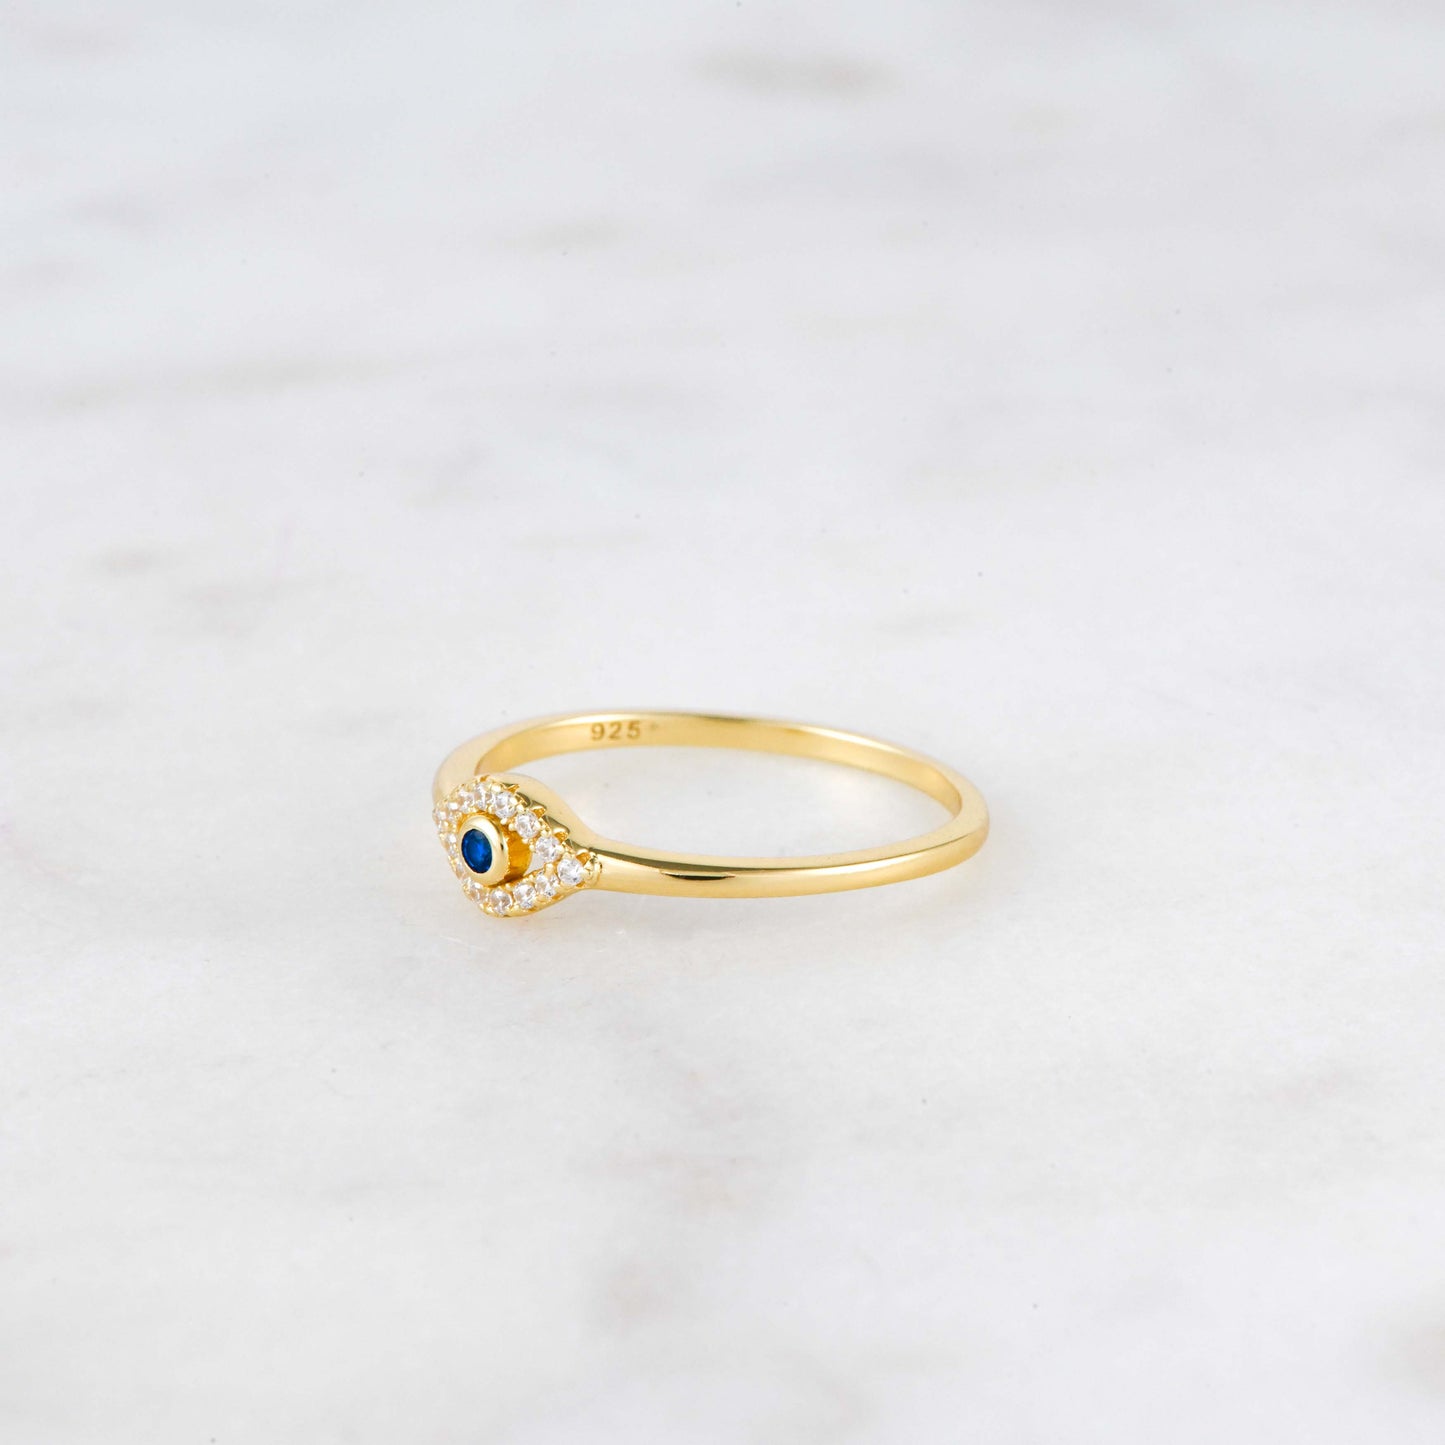 Tiny Blue Evil Eye Ring